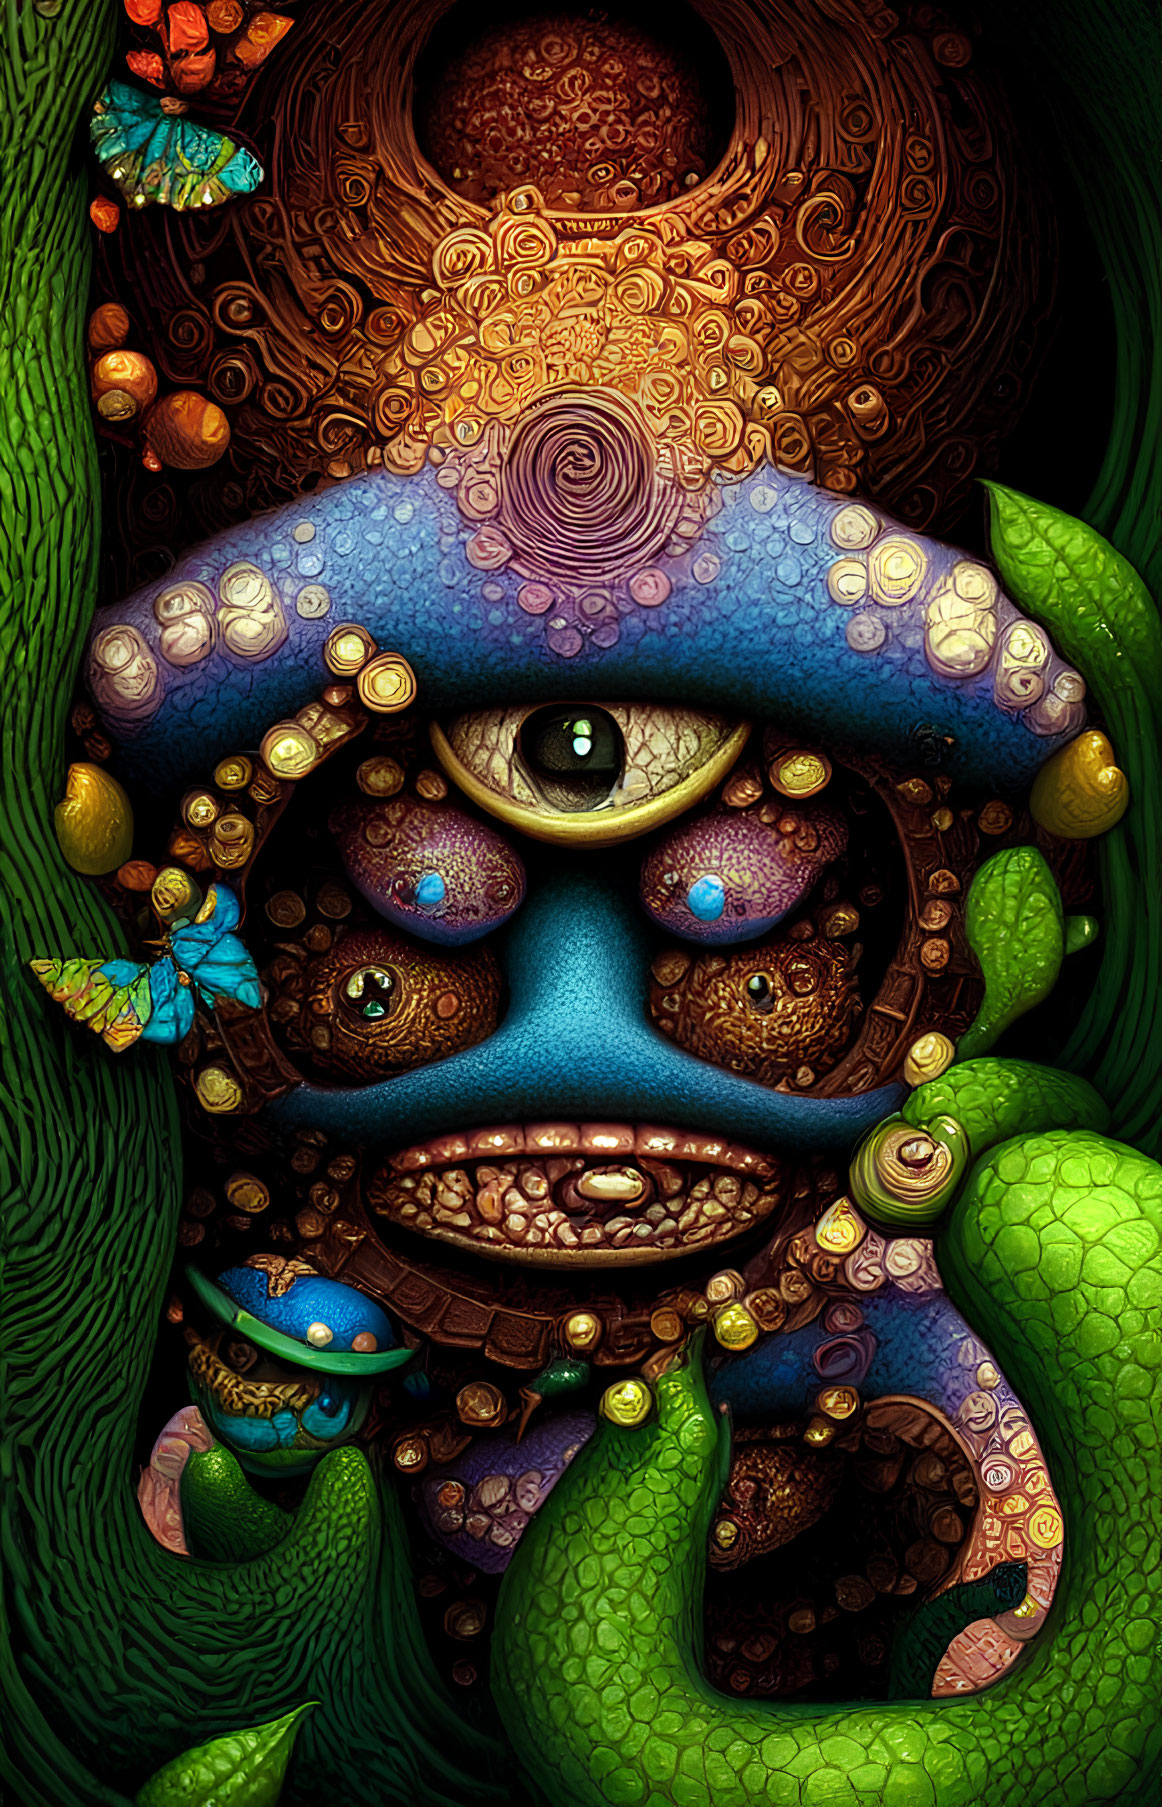 Colorful fantastical forest entity with singular eye in vibrant illustration